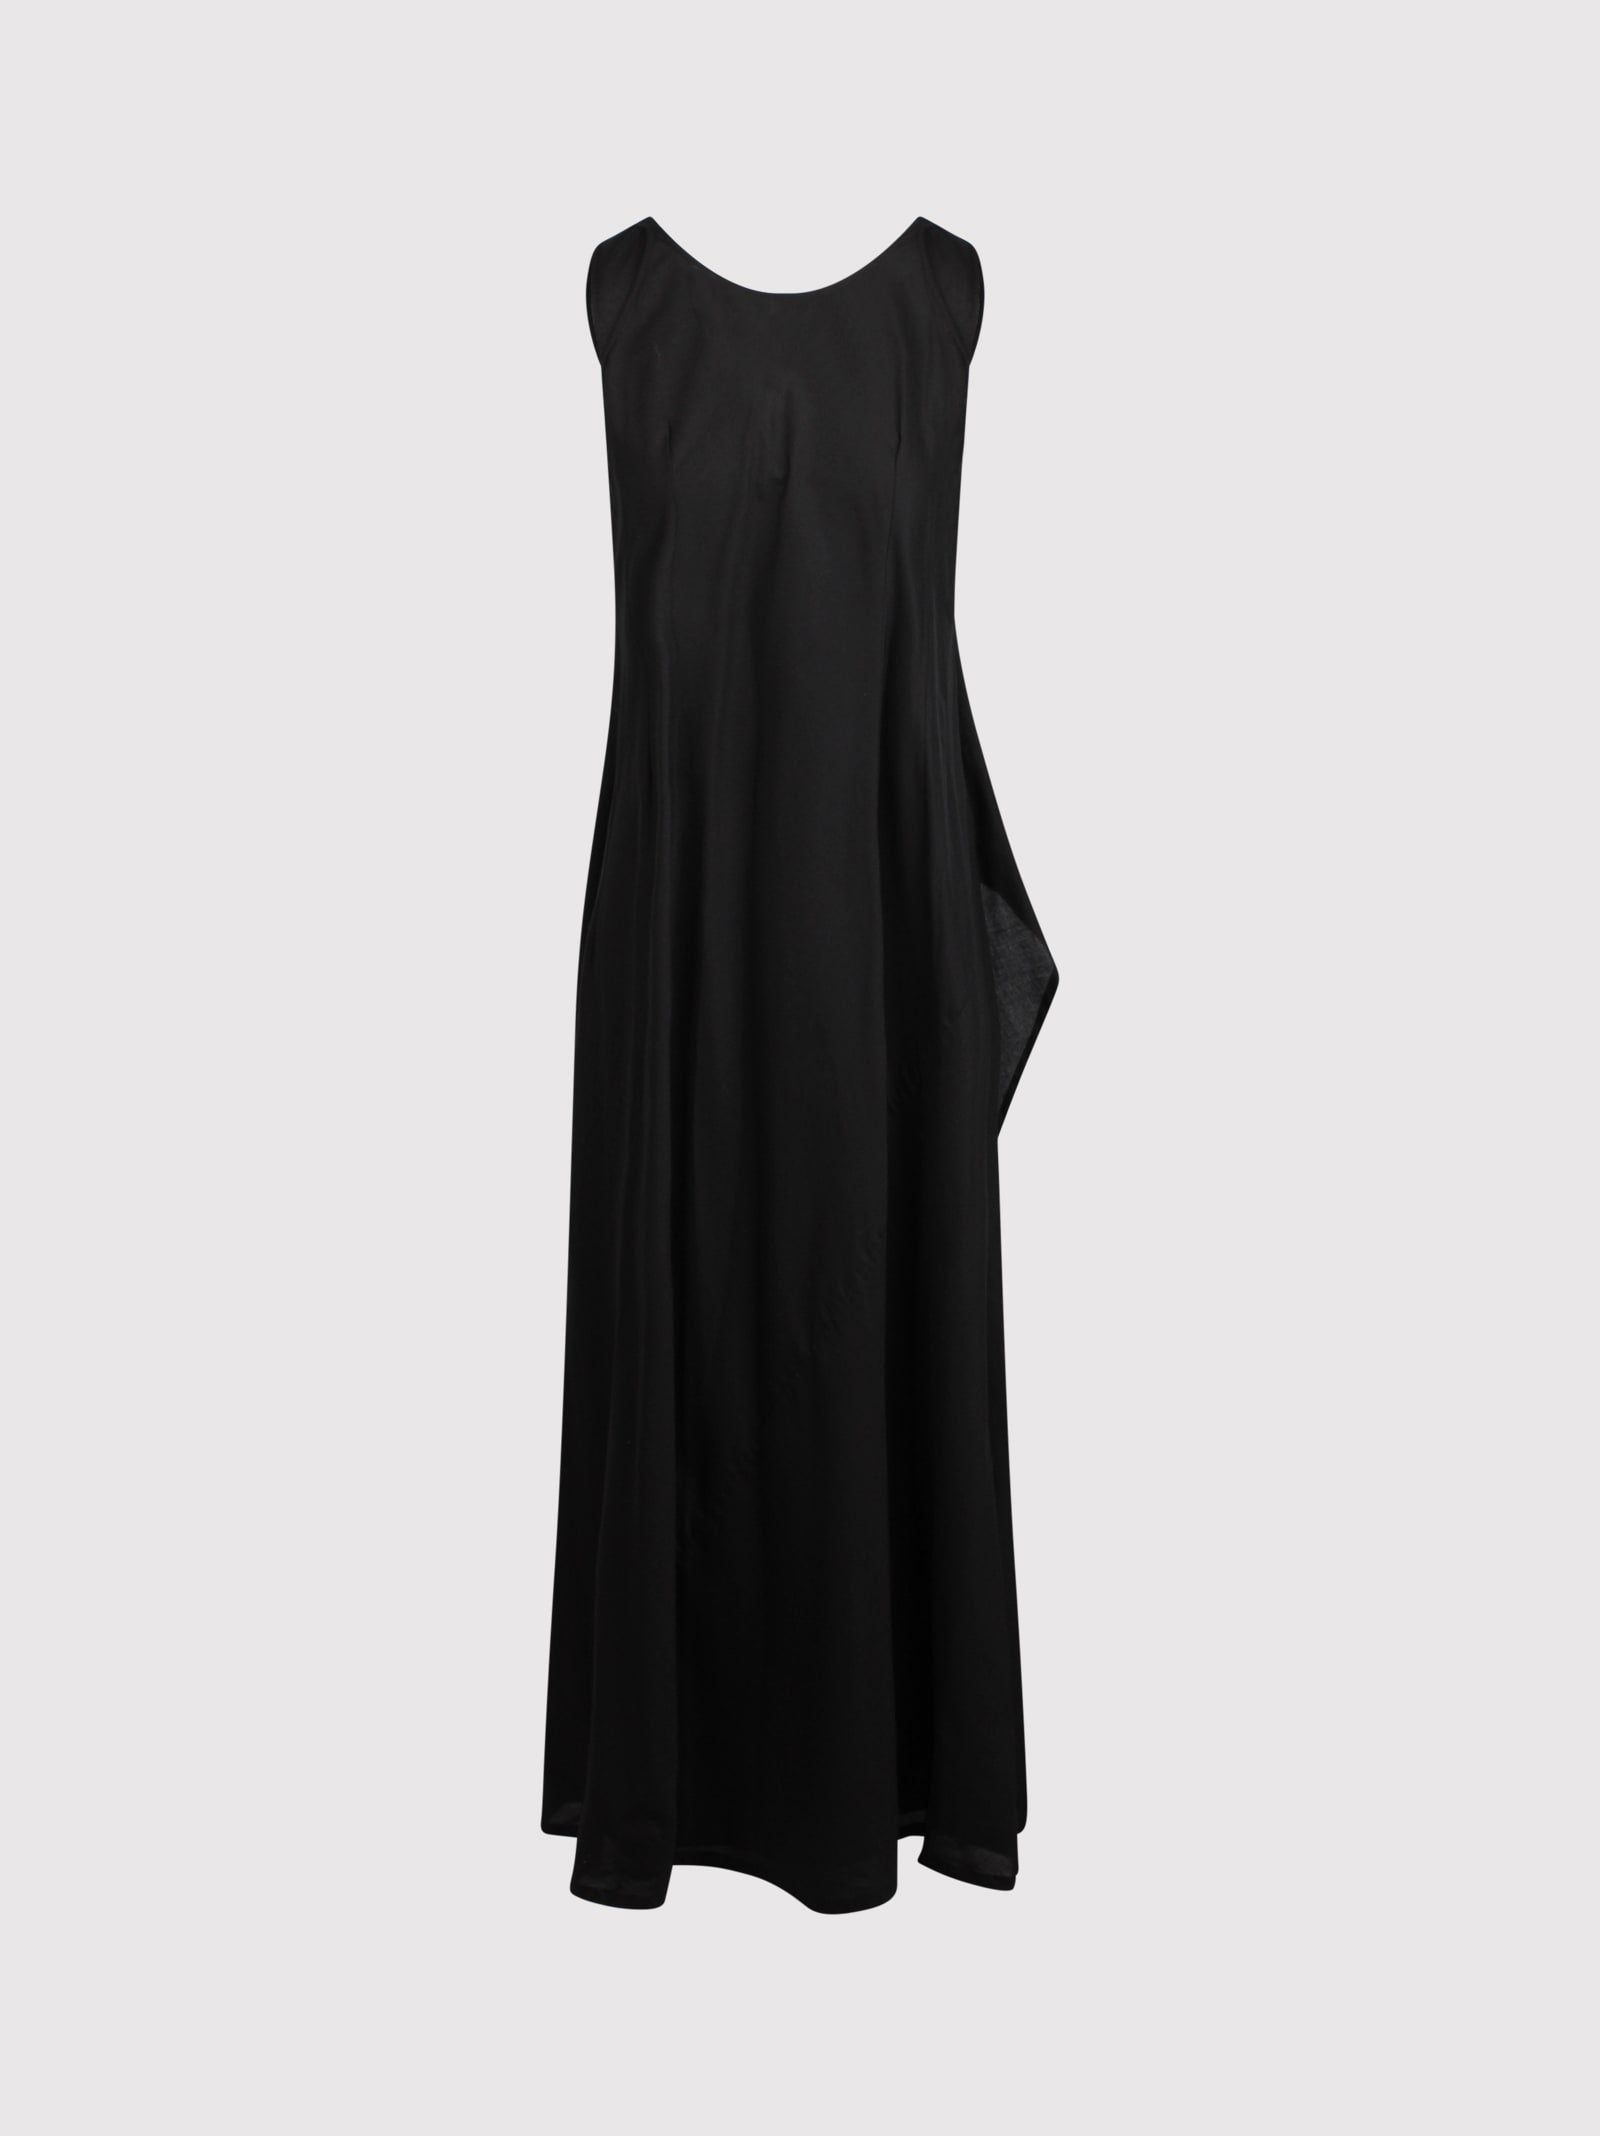 Double Layered Black Cotton Dress